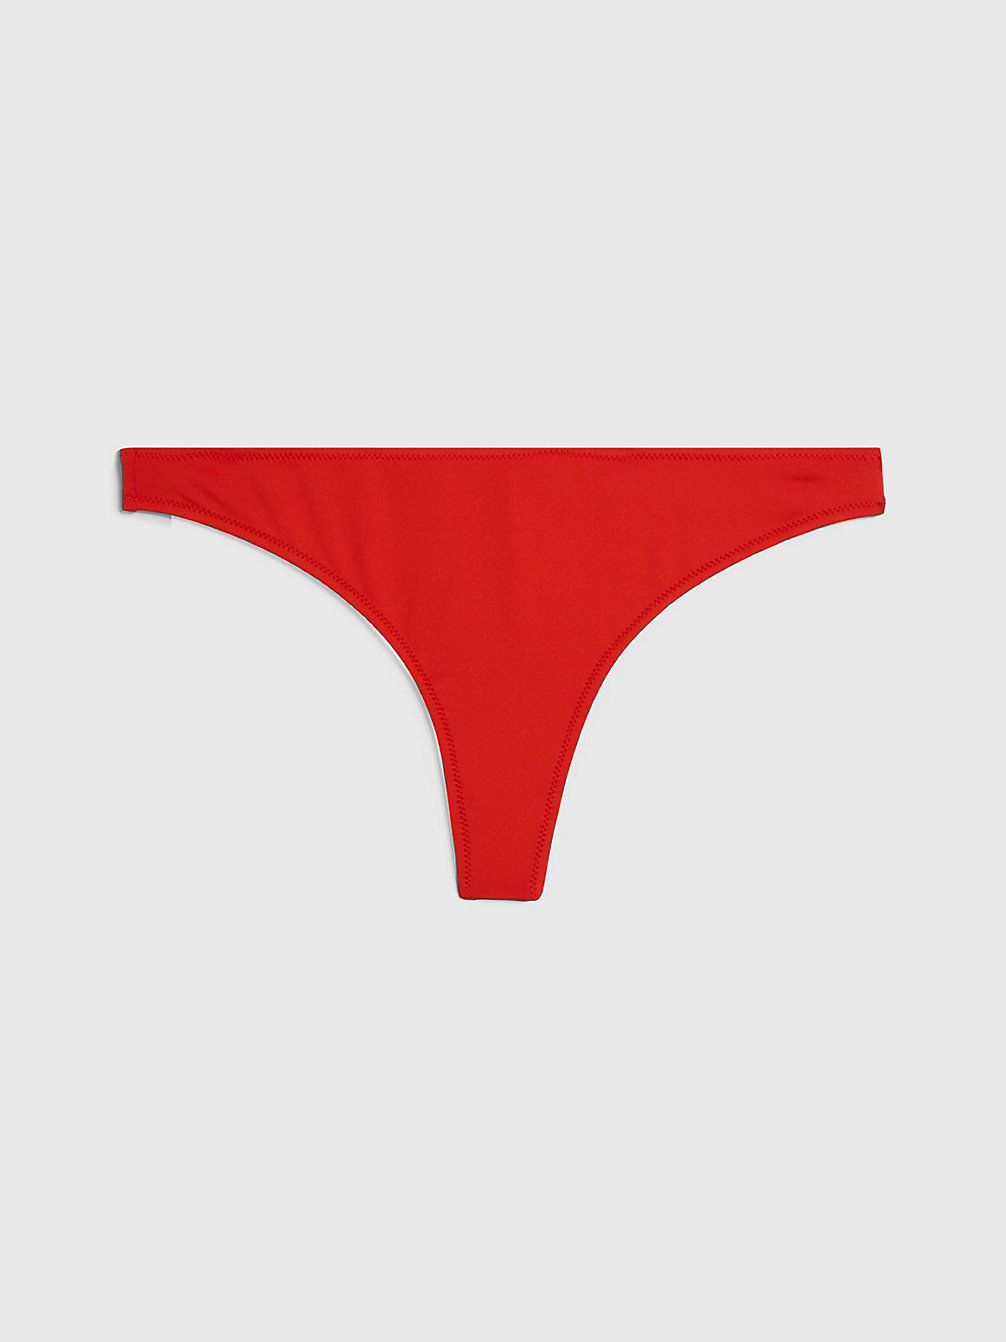 CAJUN RED Thong Bikini Bottoms - CK Monogram undefined women Calvin Klein